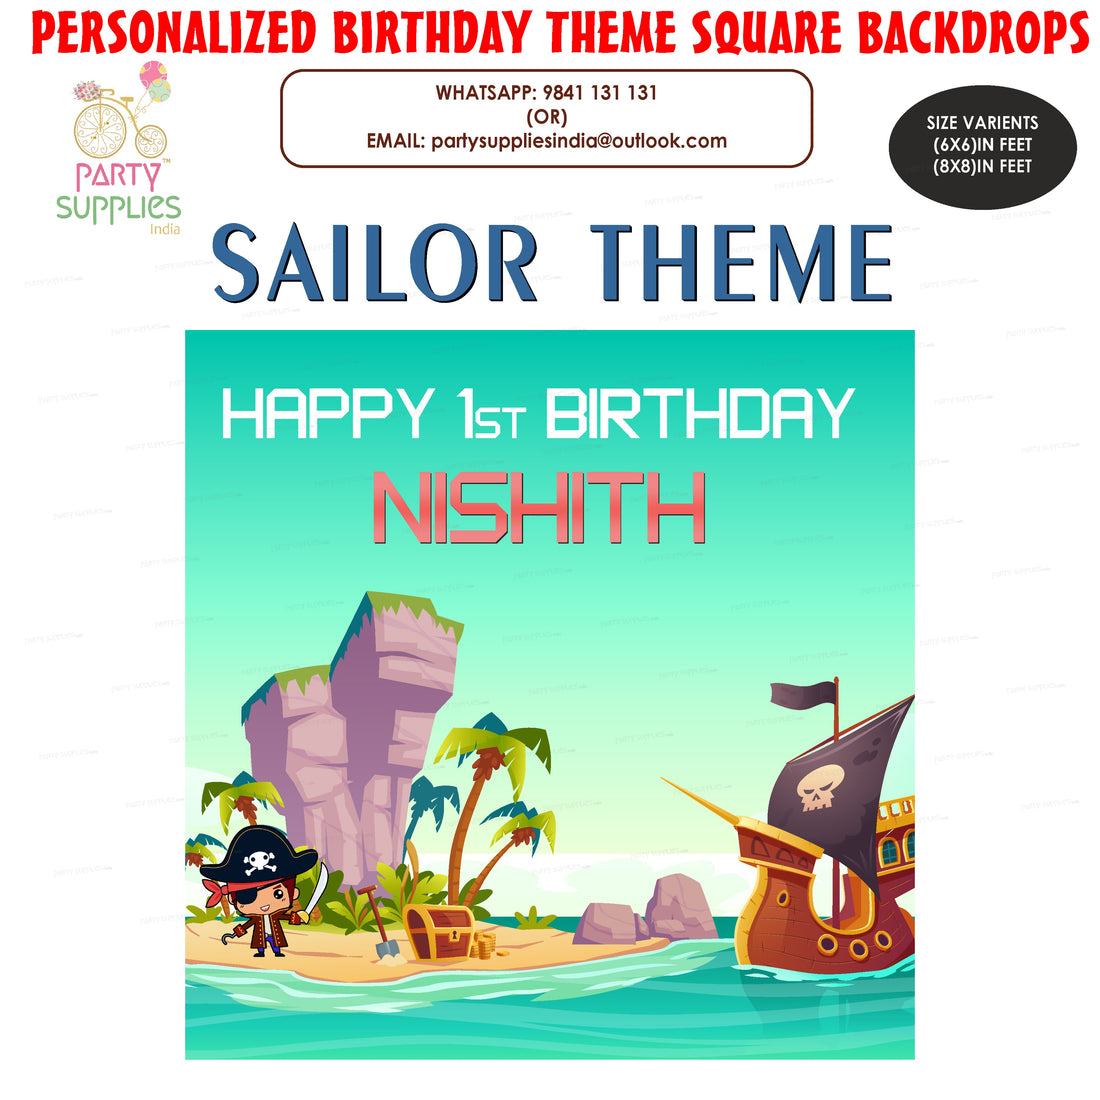 PSI Sailor Theme Classic Square Backdrop